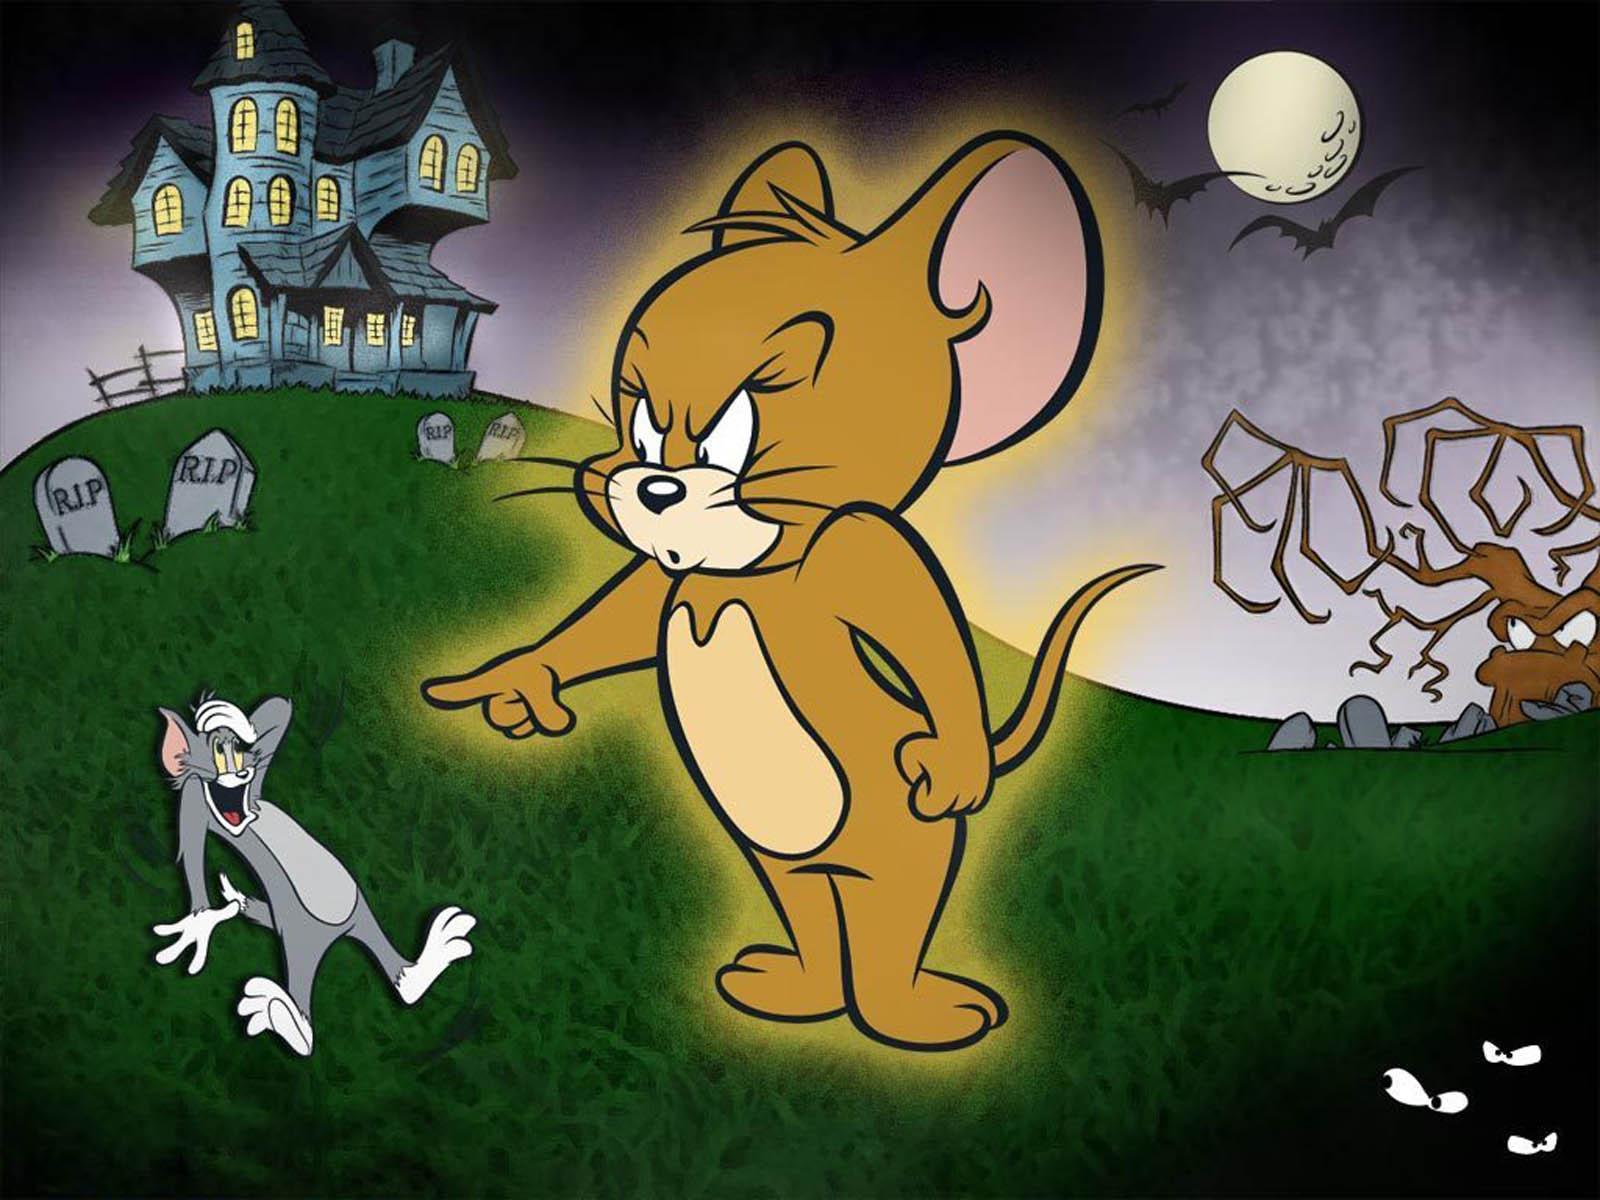 Tom Dan Jerry Studio Mayapada